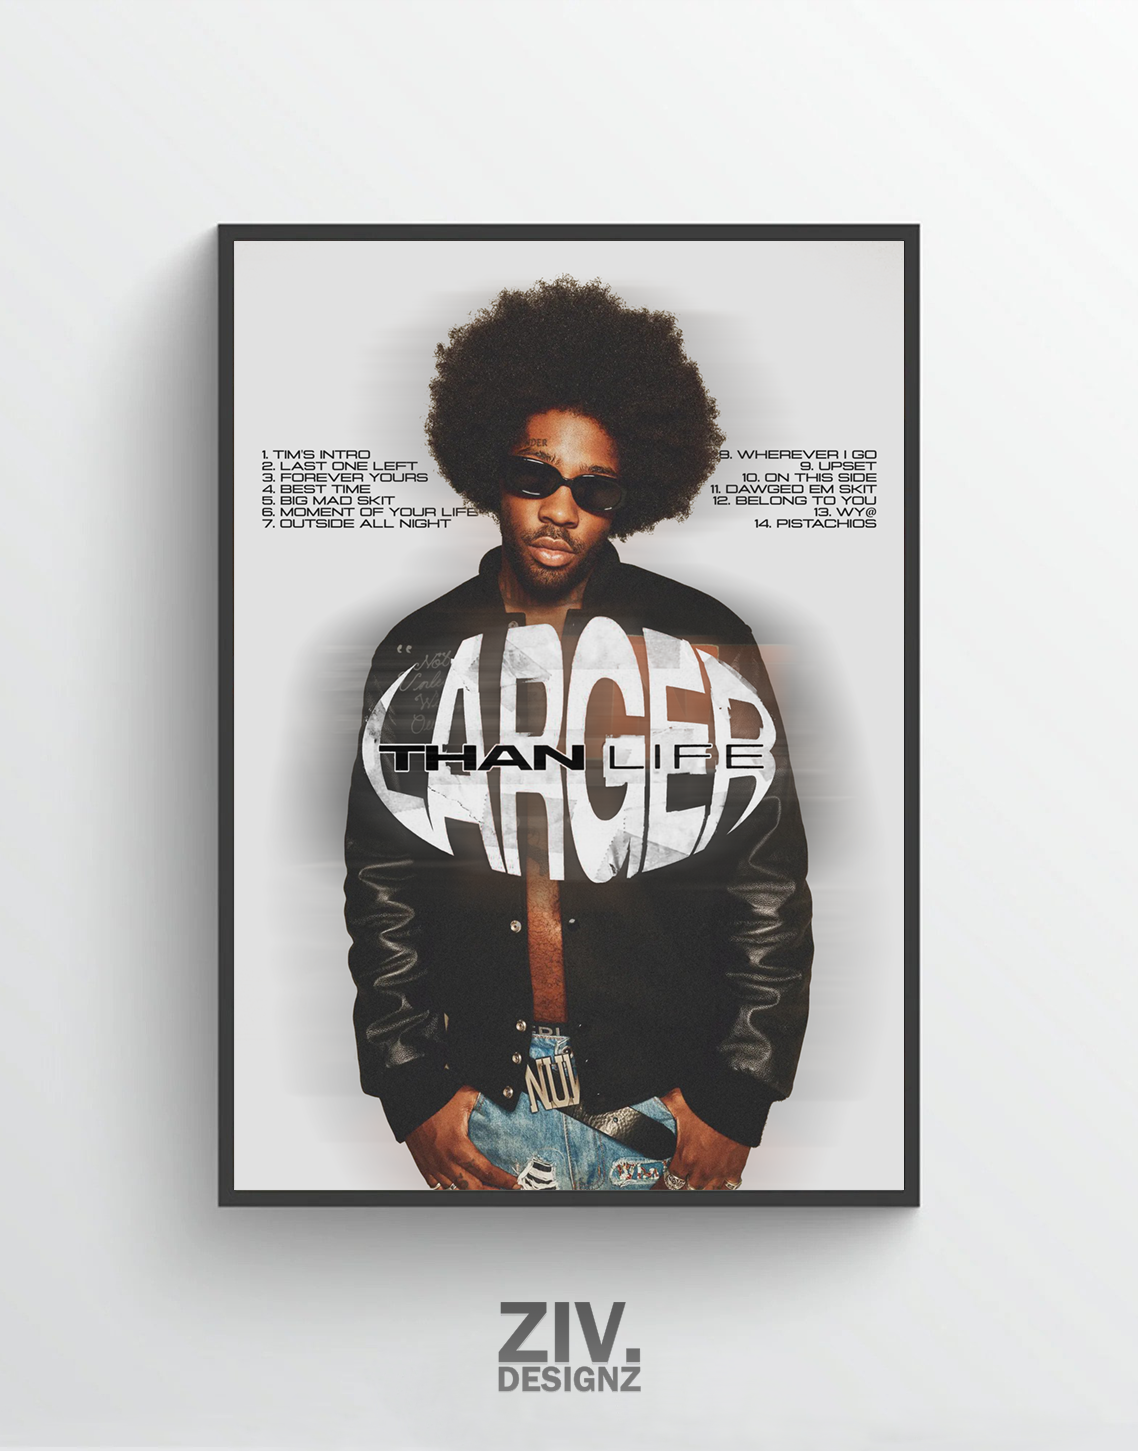 Brent Faiyaz - Wasteland - Canvas Poster - Rap Prints